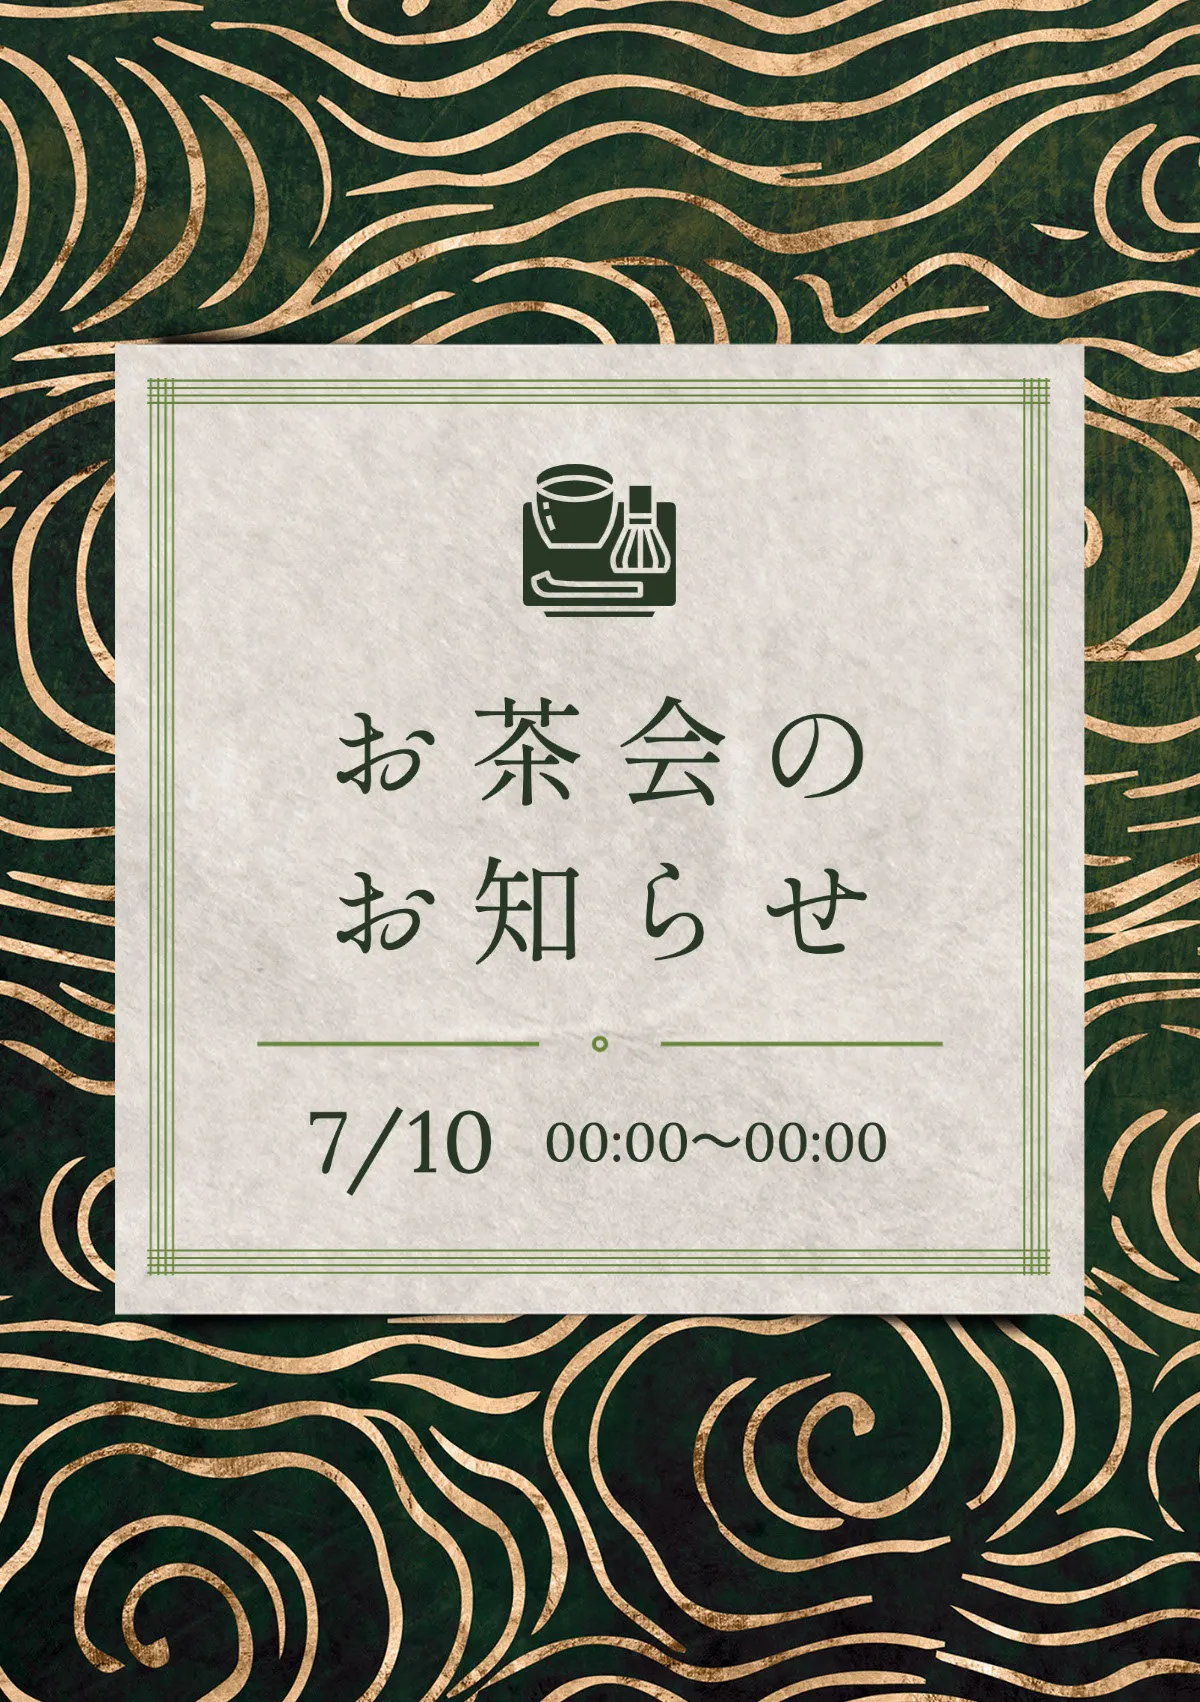 Green tea party invitation